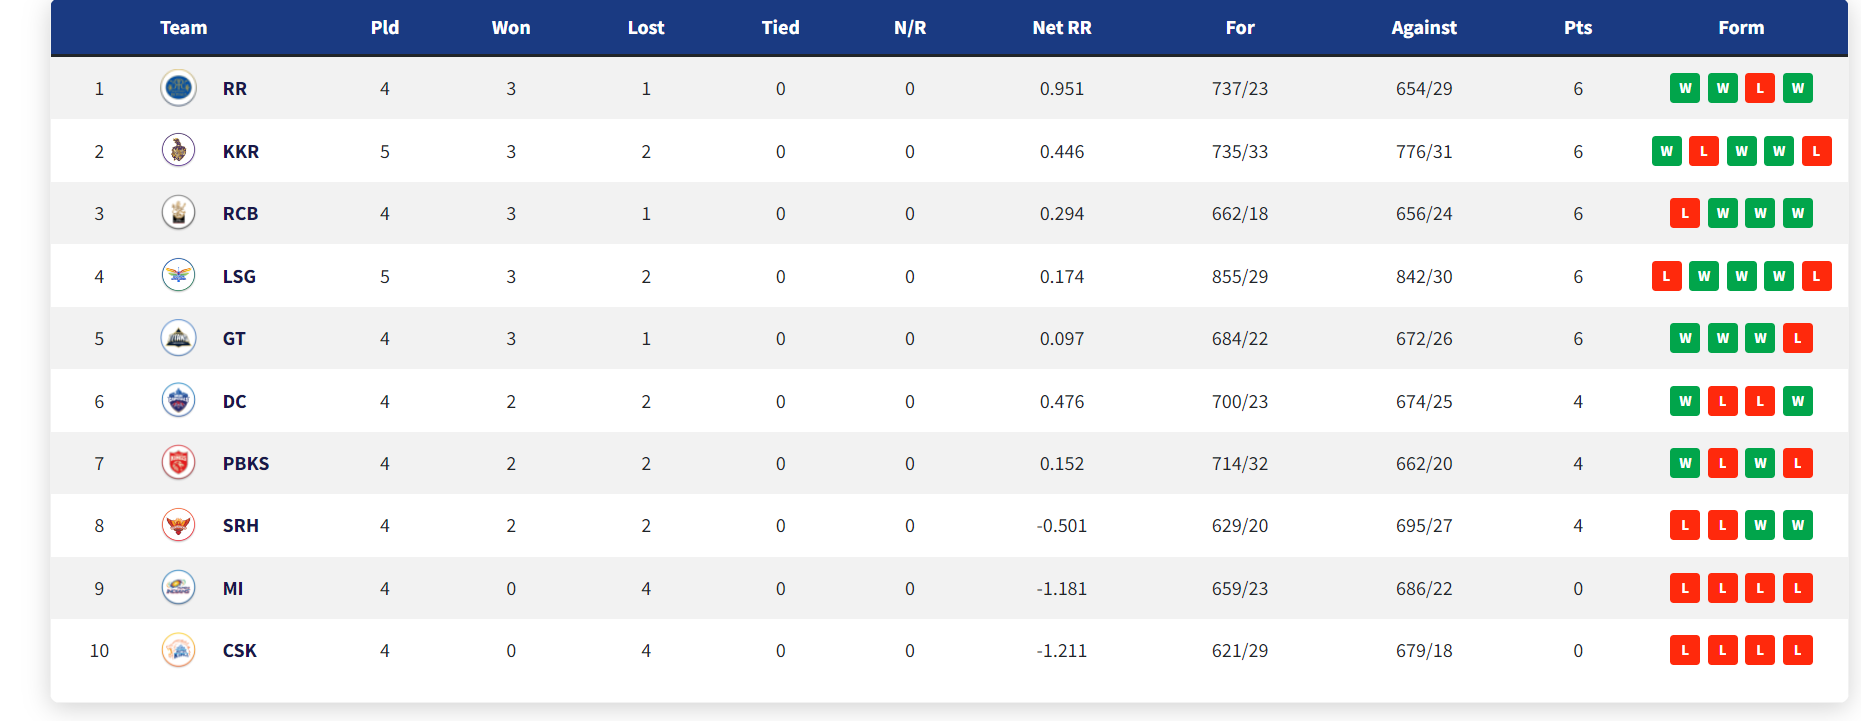 IPL 2022: Updated Points Table, Orange Cap And Purple Cap After Match 21 SRH vs GT